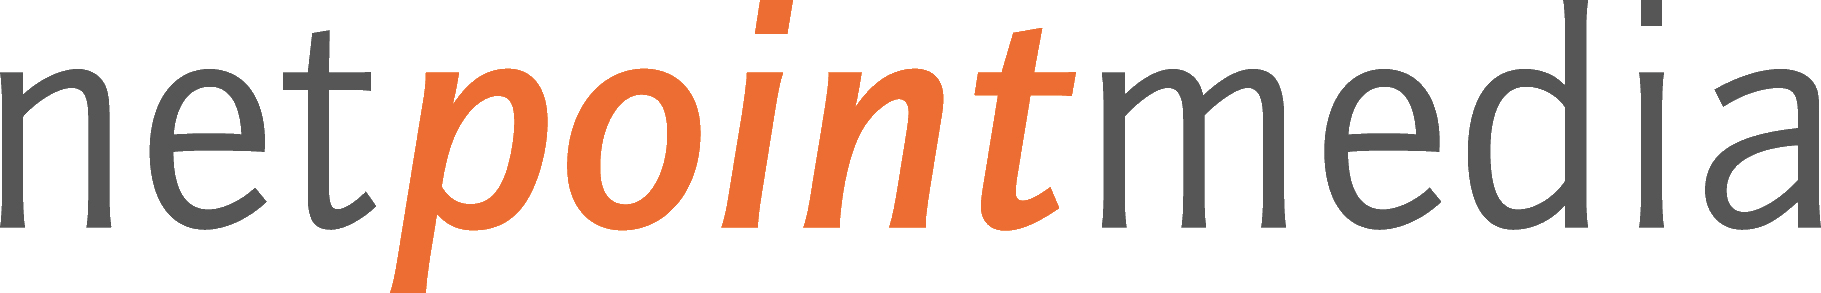 netpoint logo - transparent